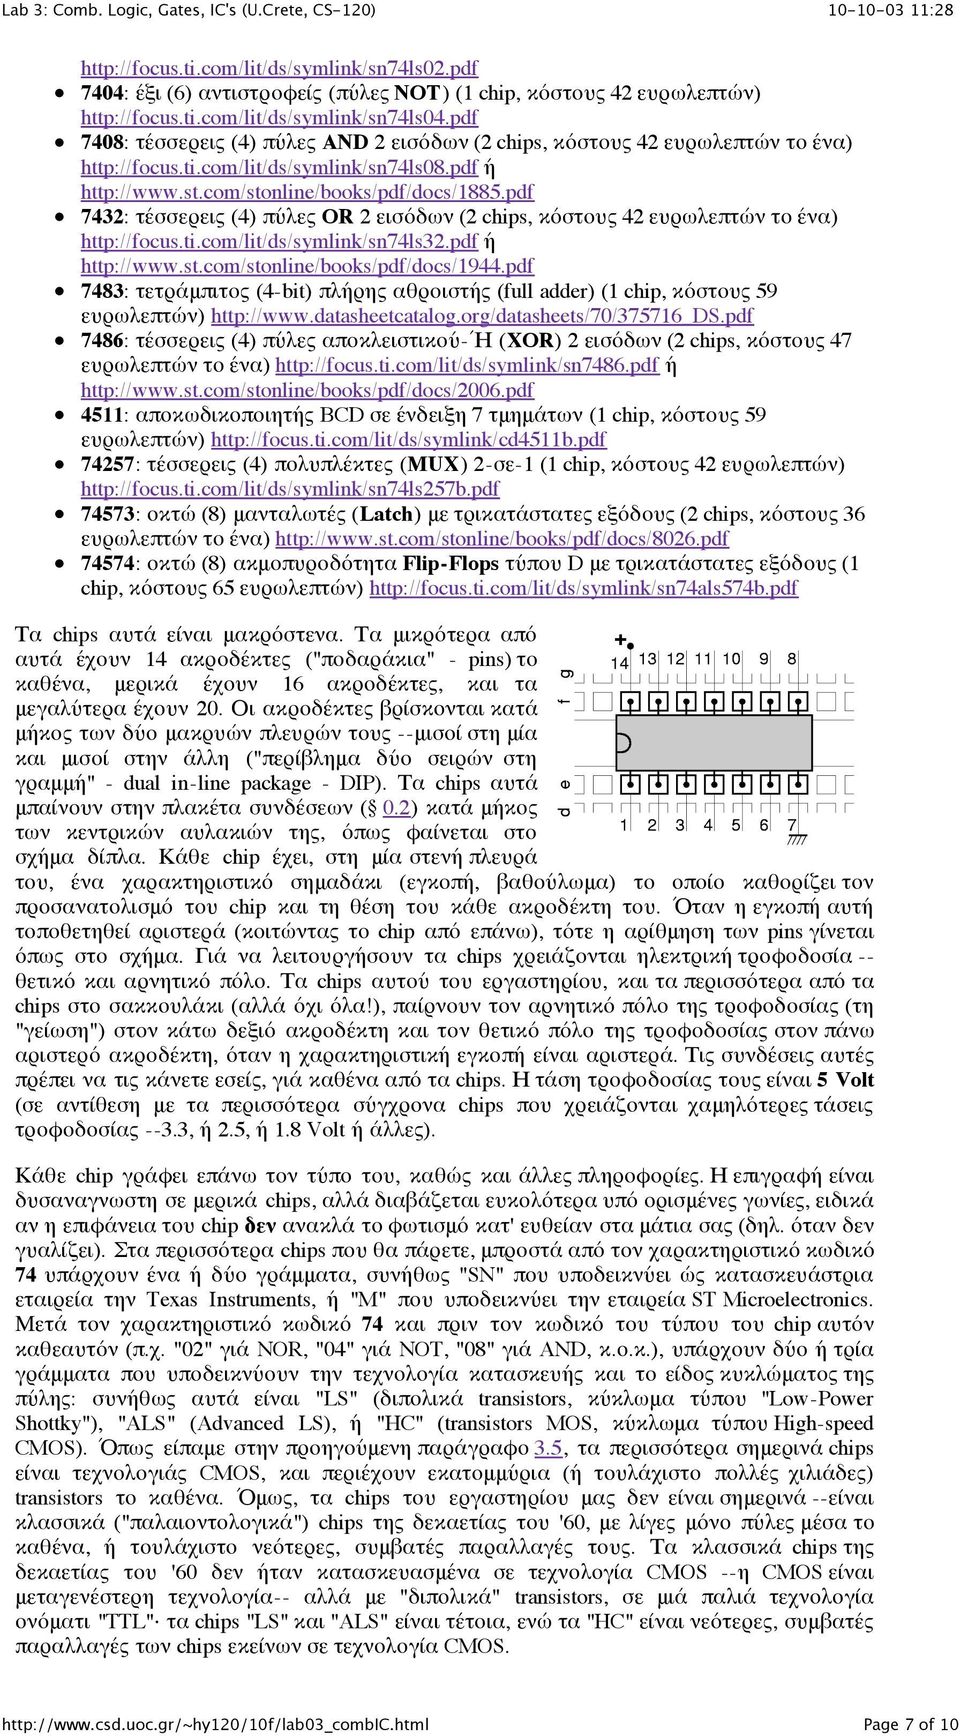 pdf 7432: τέσσερεις (4) πύλες OR 2 εισόδων (2 chips, κόστους 42 ευρωλεπτών το ένα) http://focus.ti.com/lit/ds/symlink/sn74ls32.pdf ή http://www.st.com/stonline/books/pdf/docs/1944.